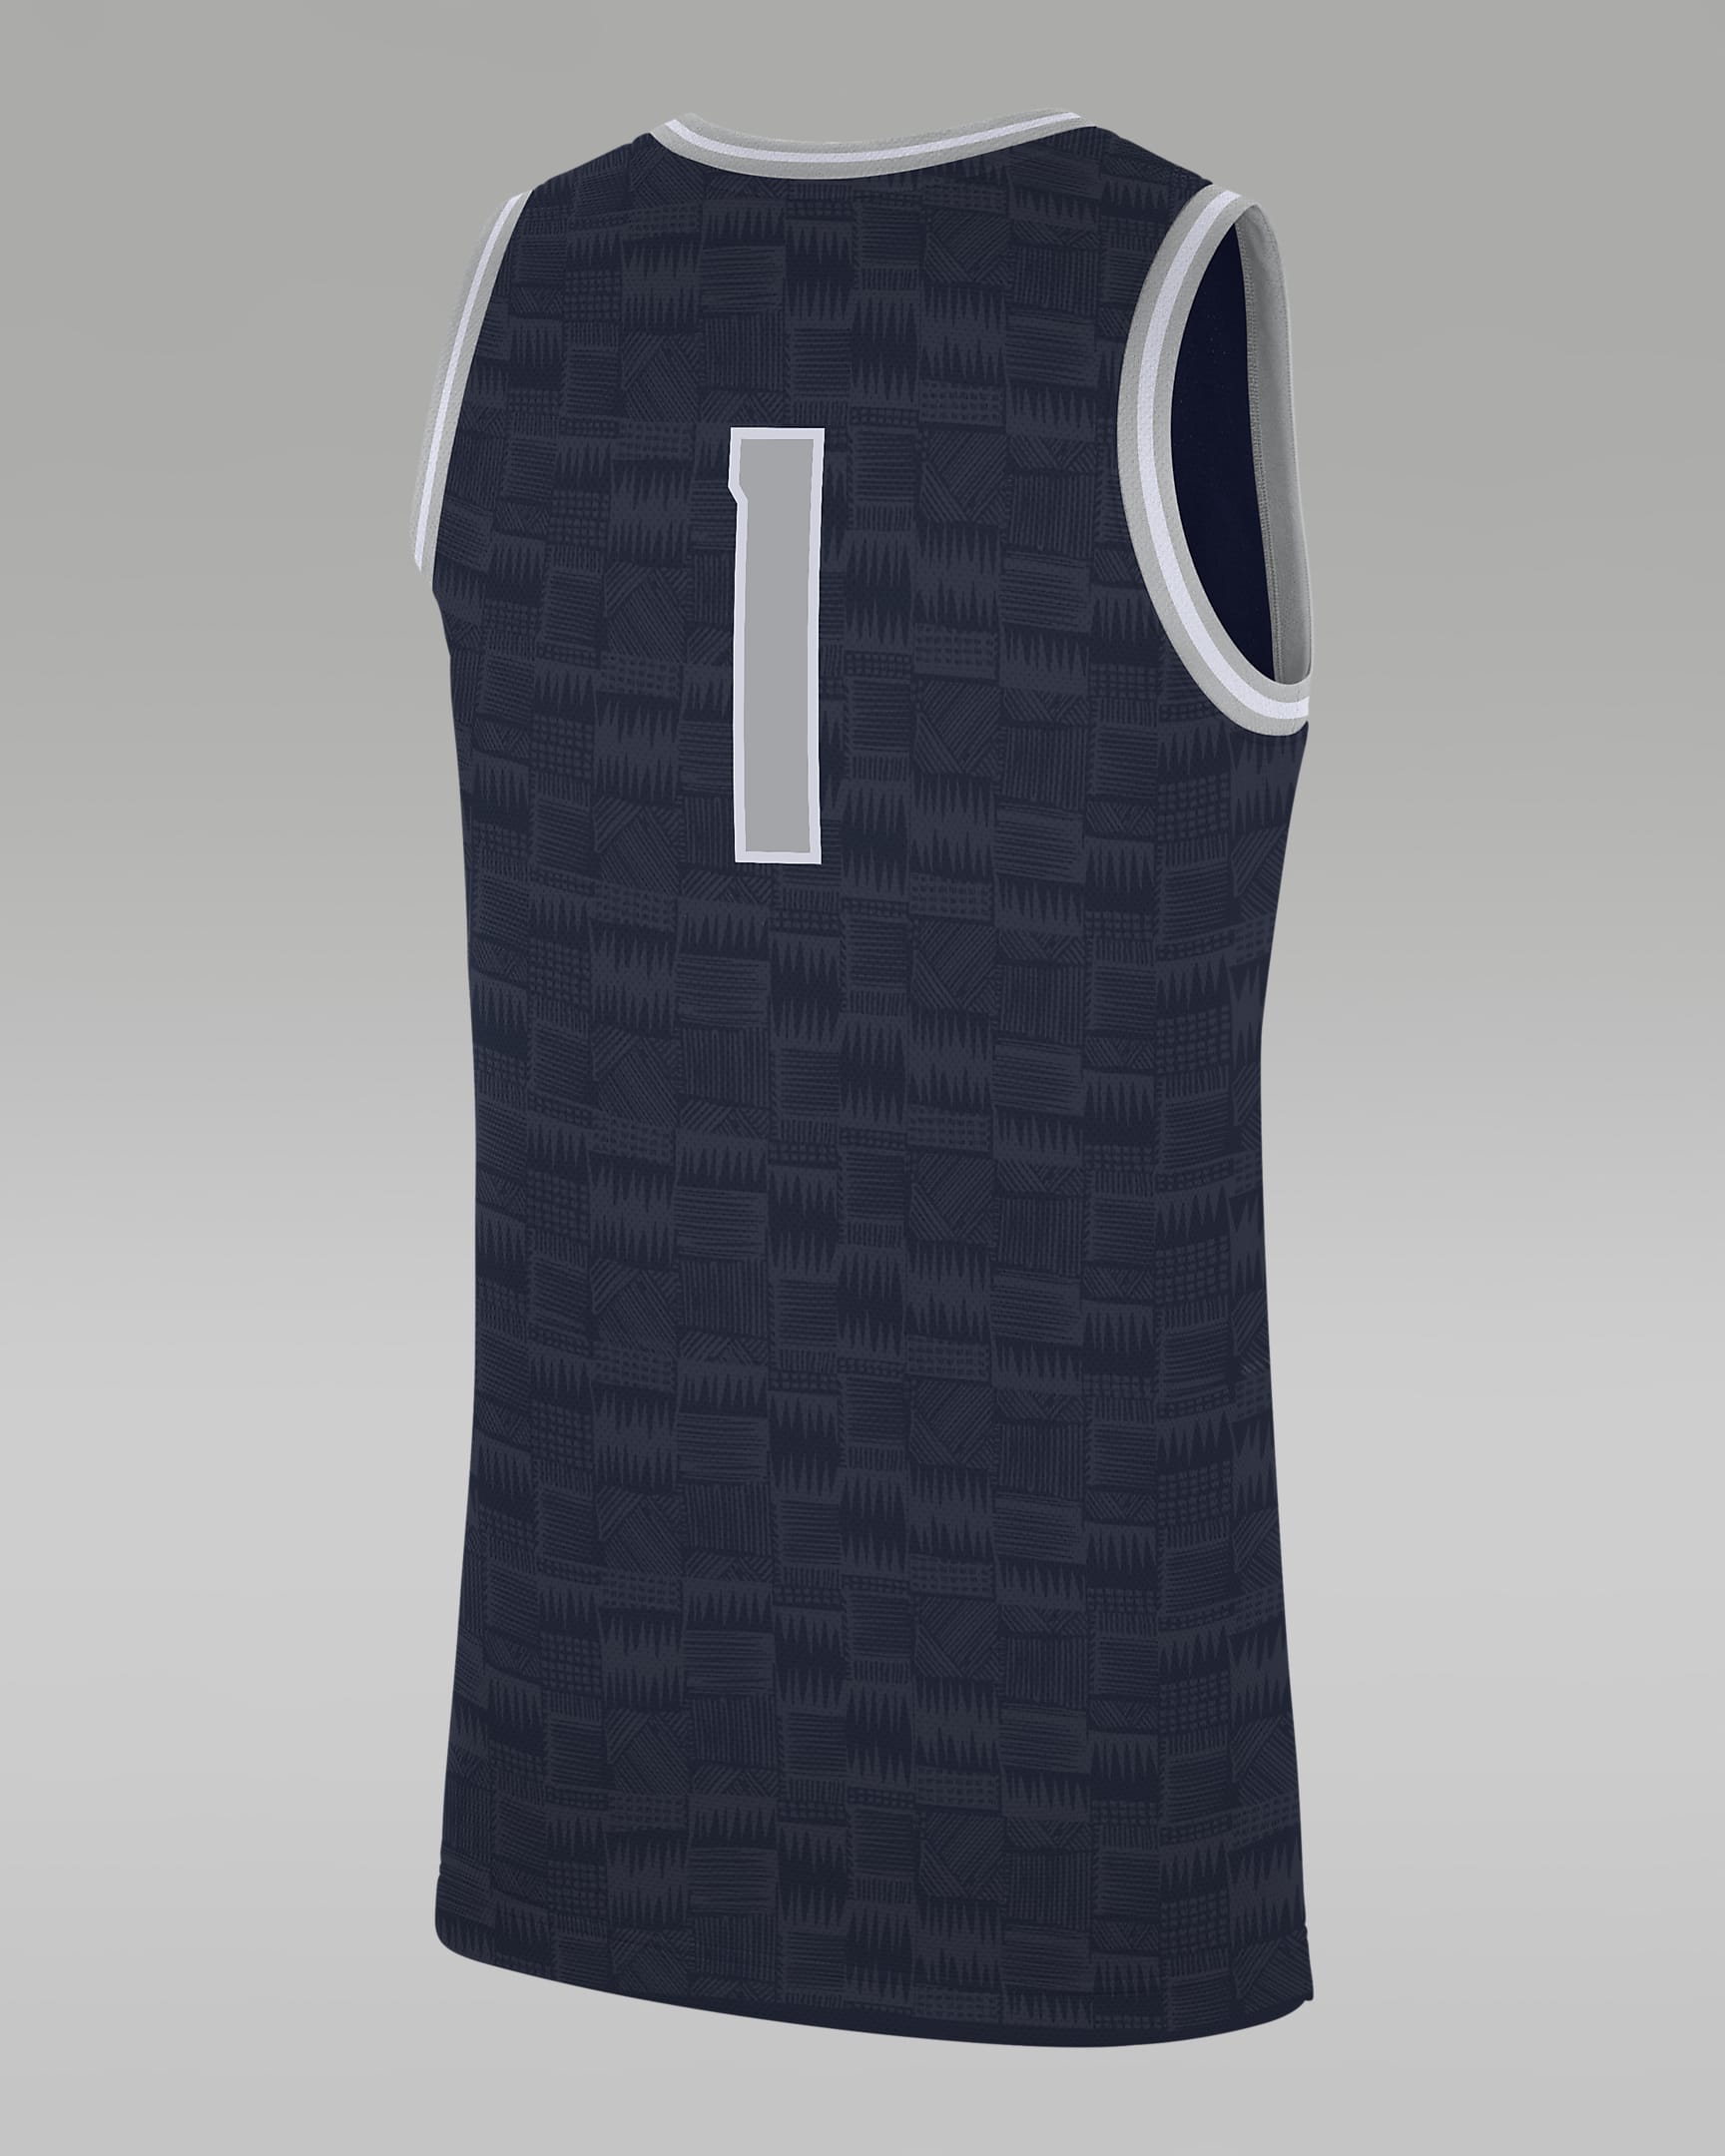 Jordan College (Georgetown) Men's Basketball Jersey. Nike.com